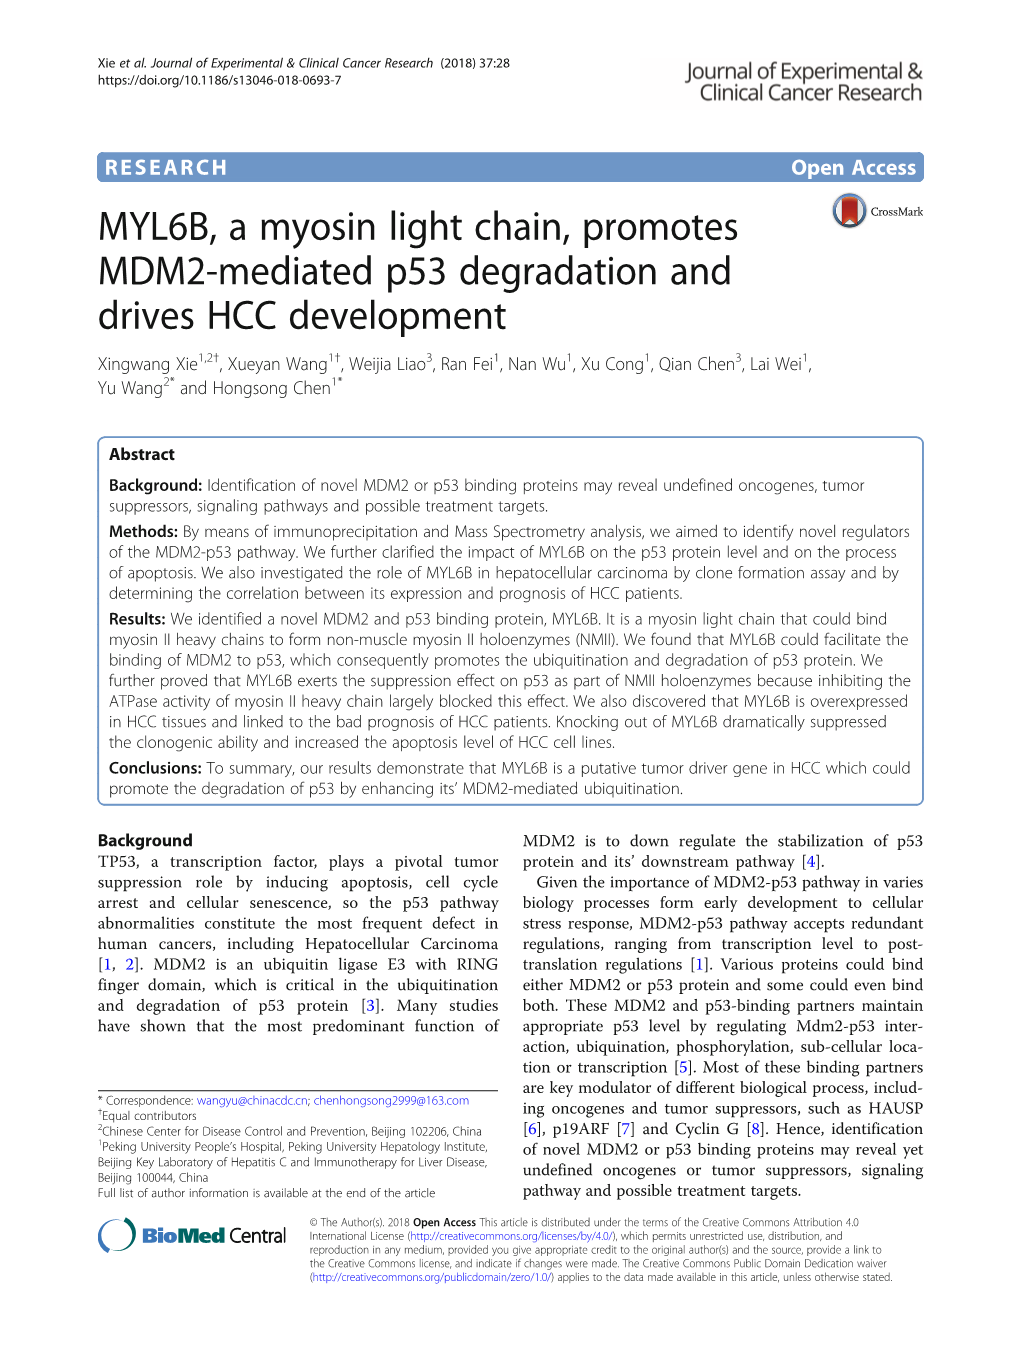 MYL6B, a Myosin Light Chain, Promotes MDM2-Mediated P53